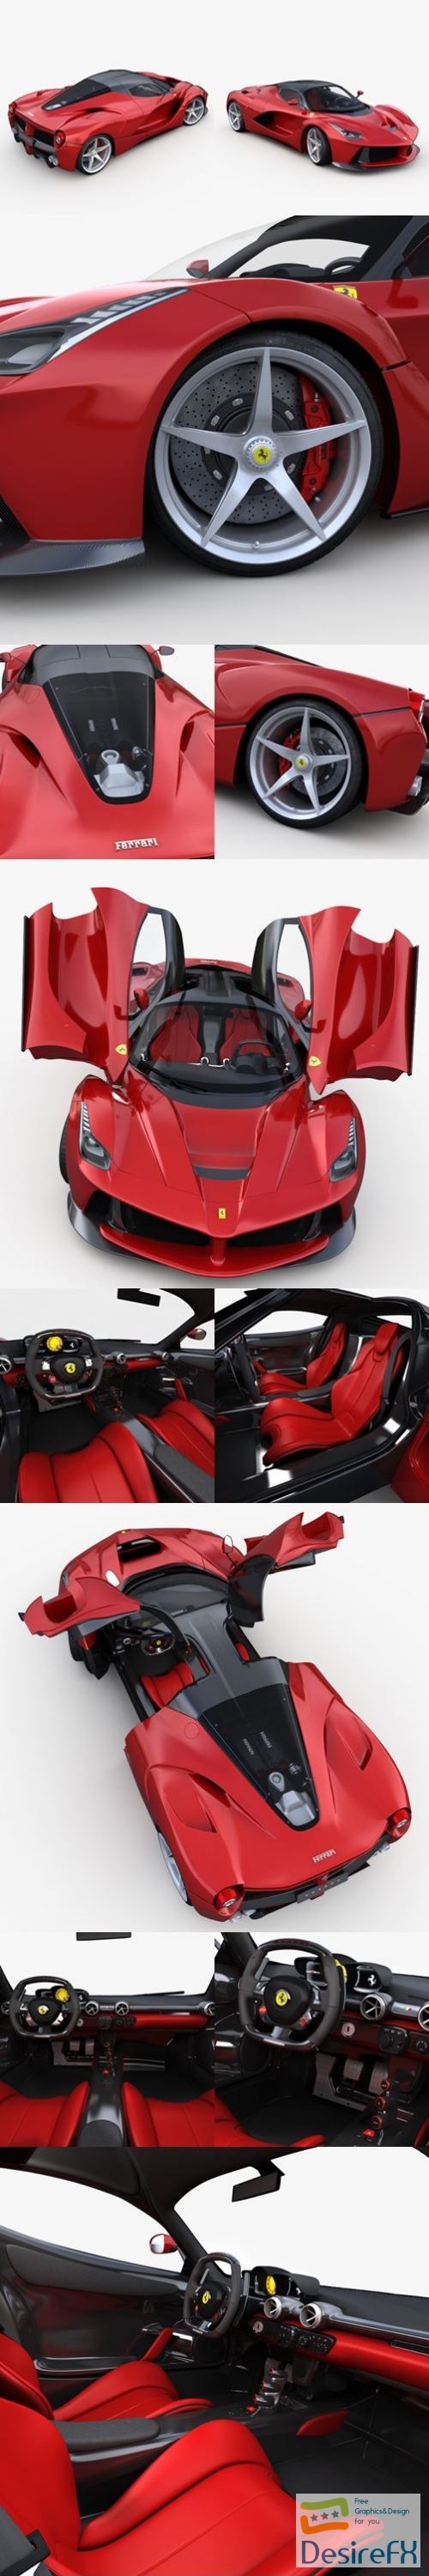 Ferrari LaFerrari 2014 3D Model